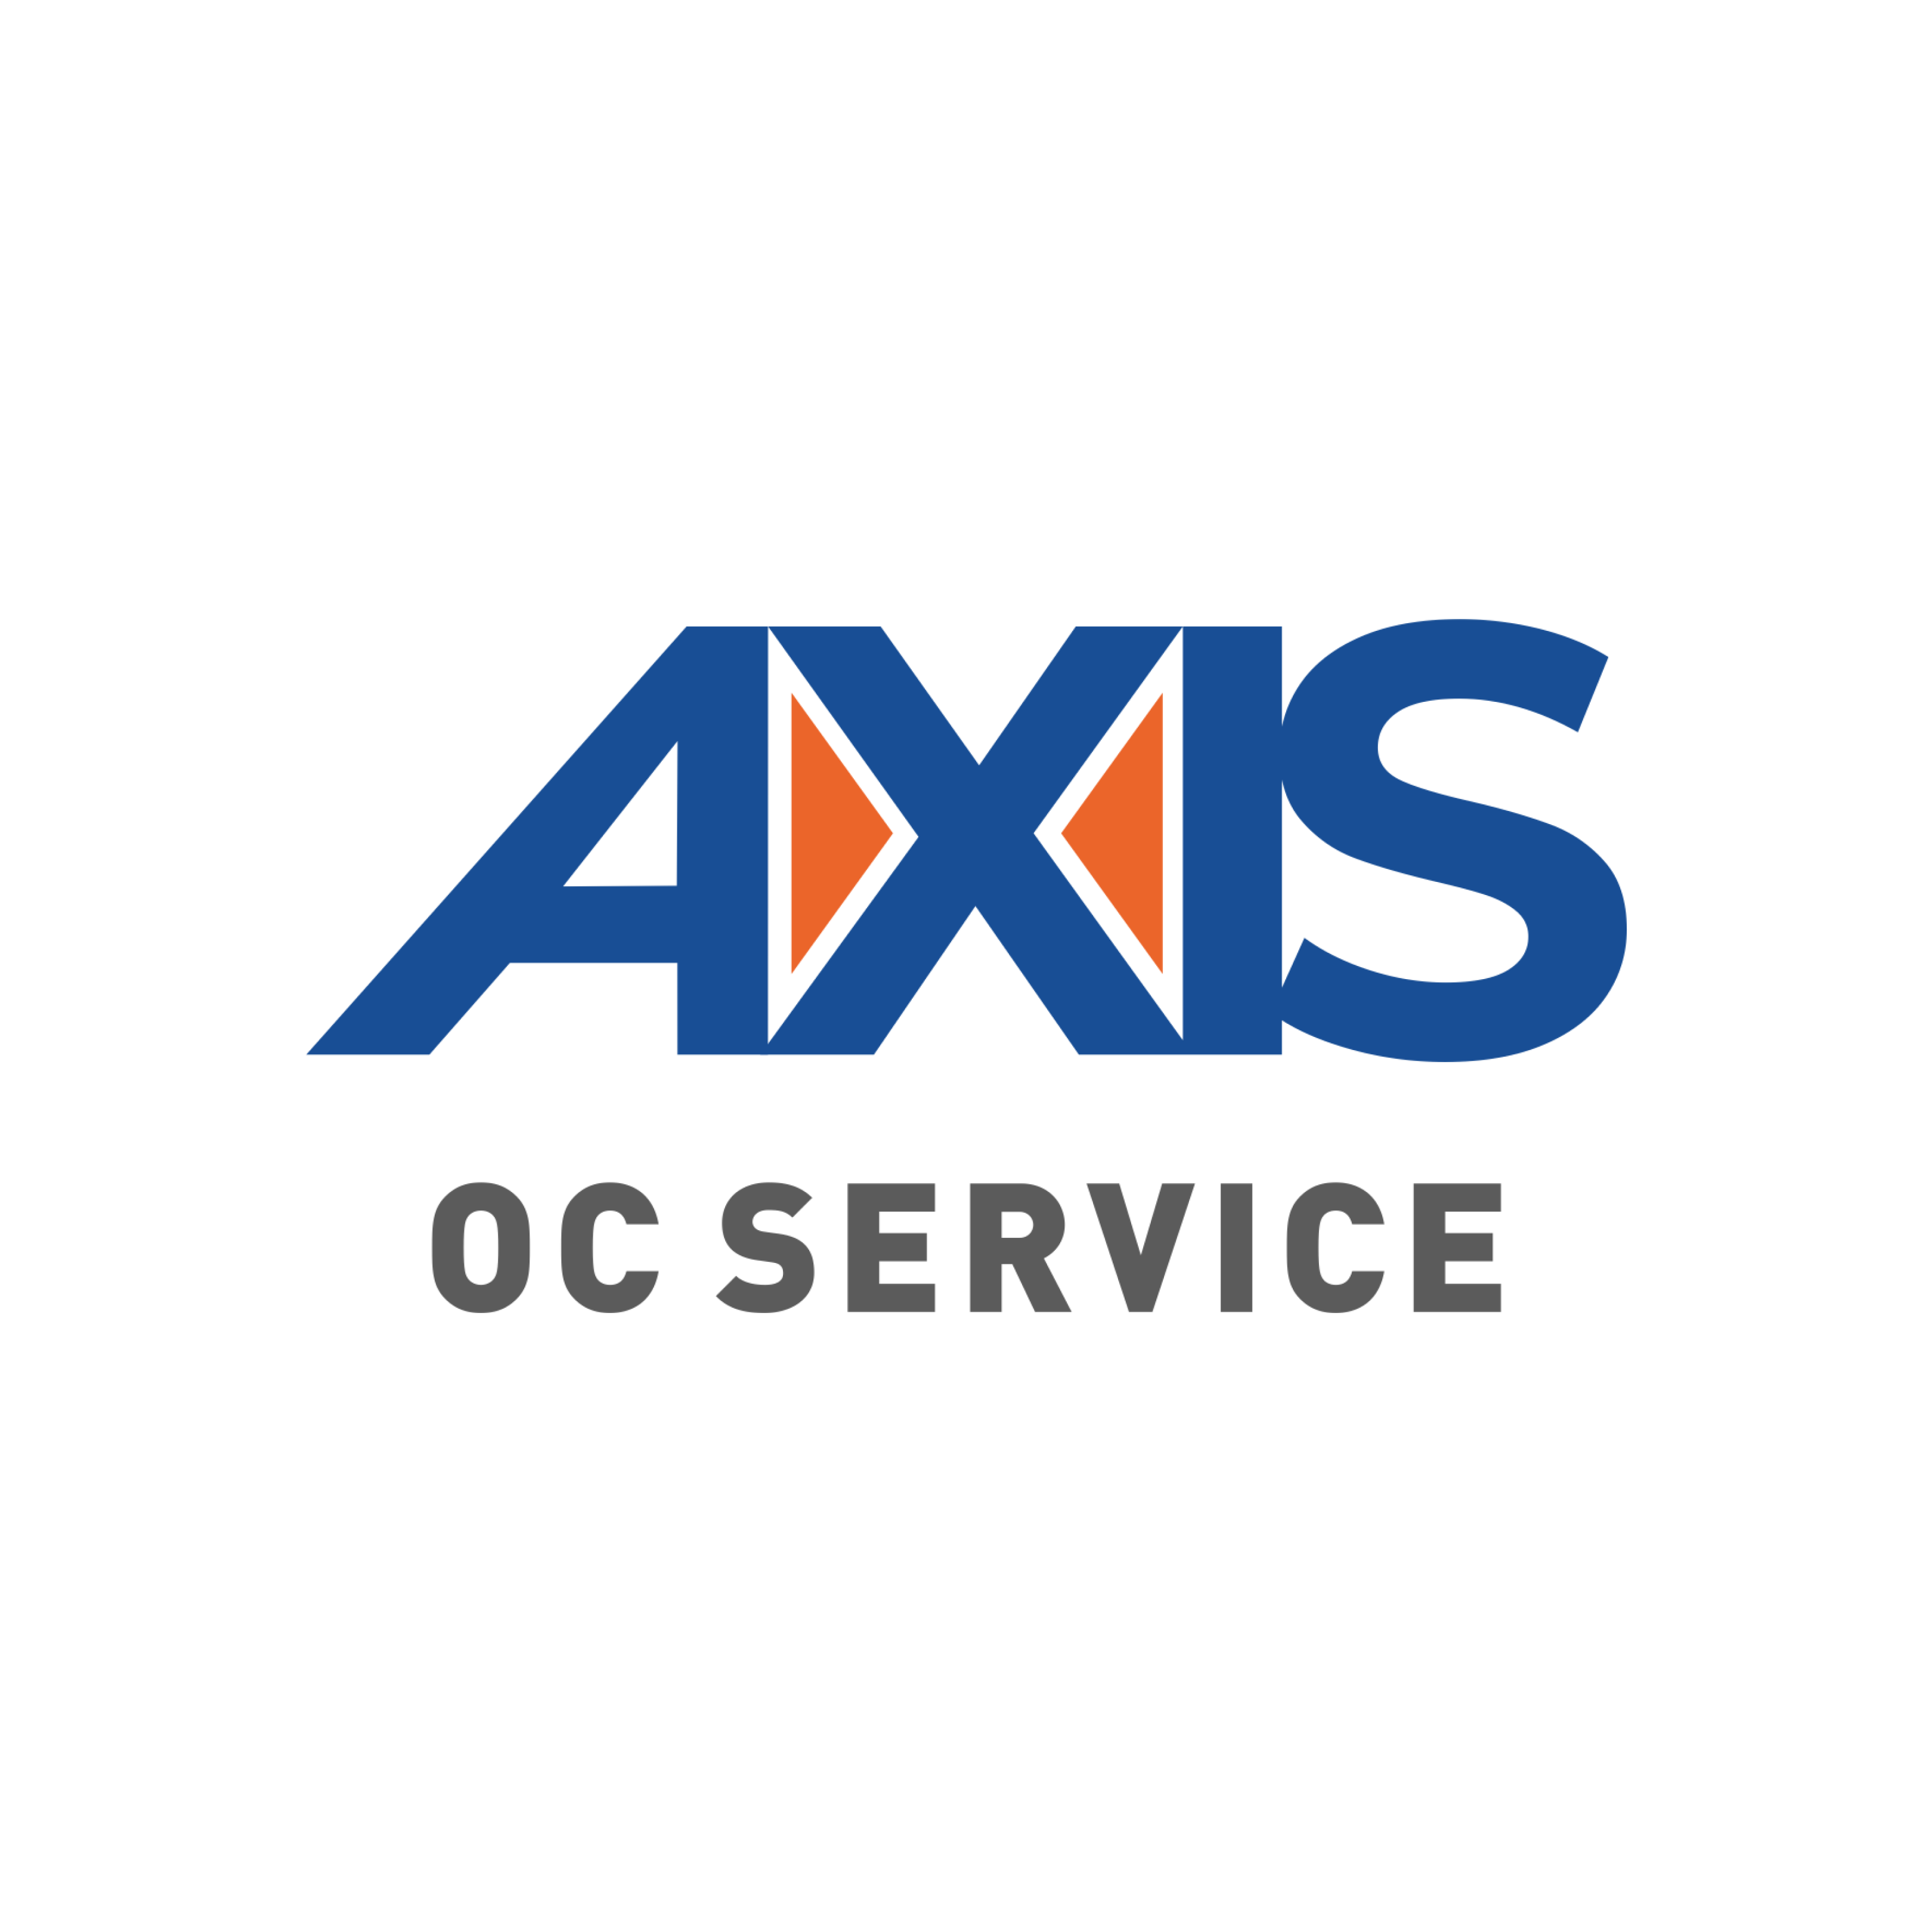 Axis OC Service Corp Logo